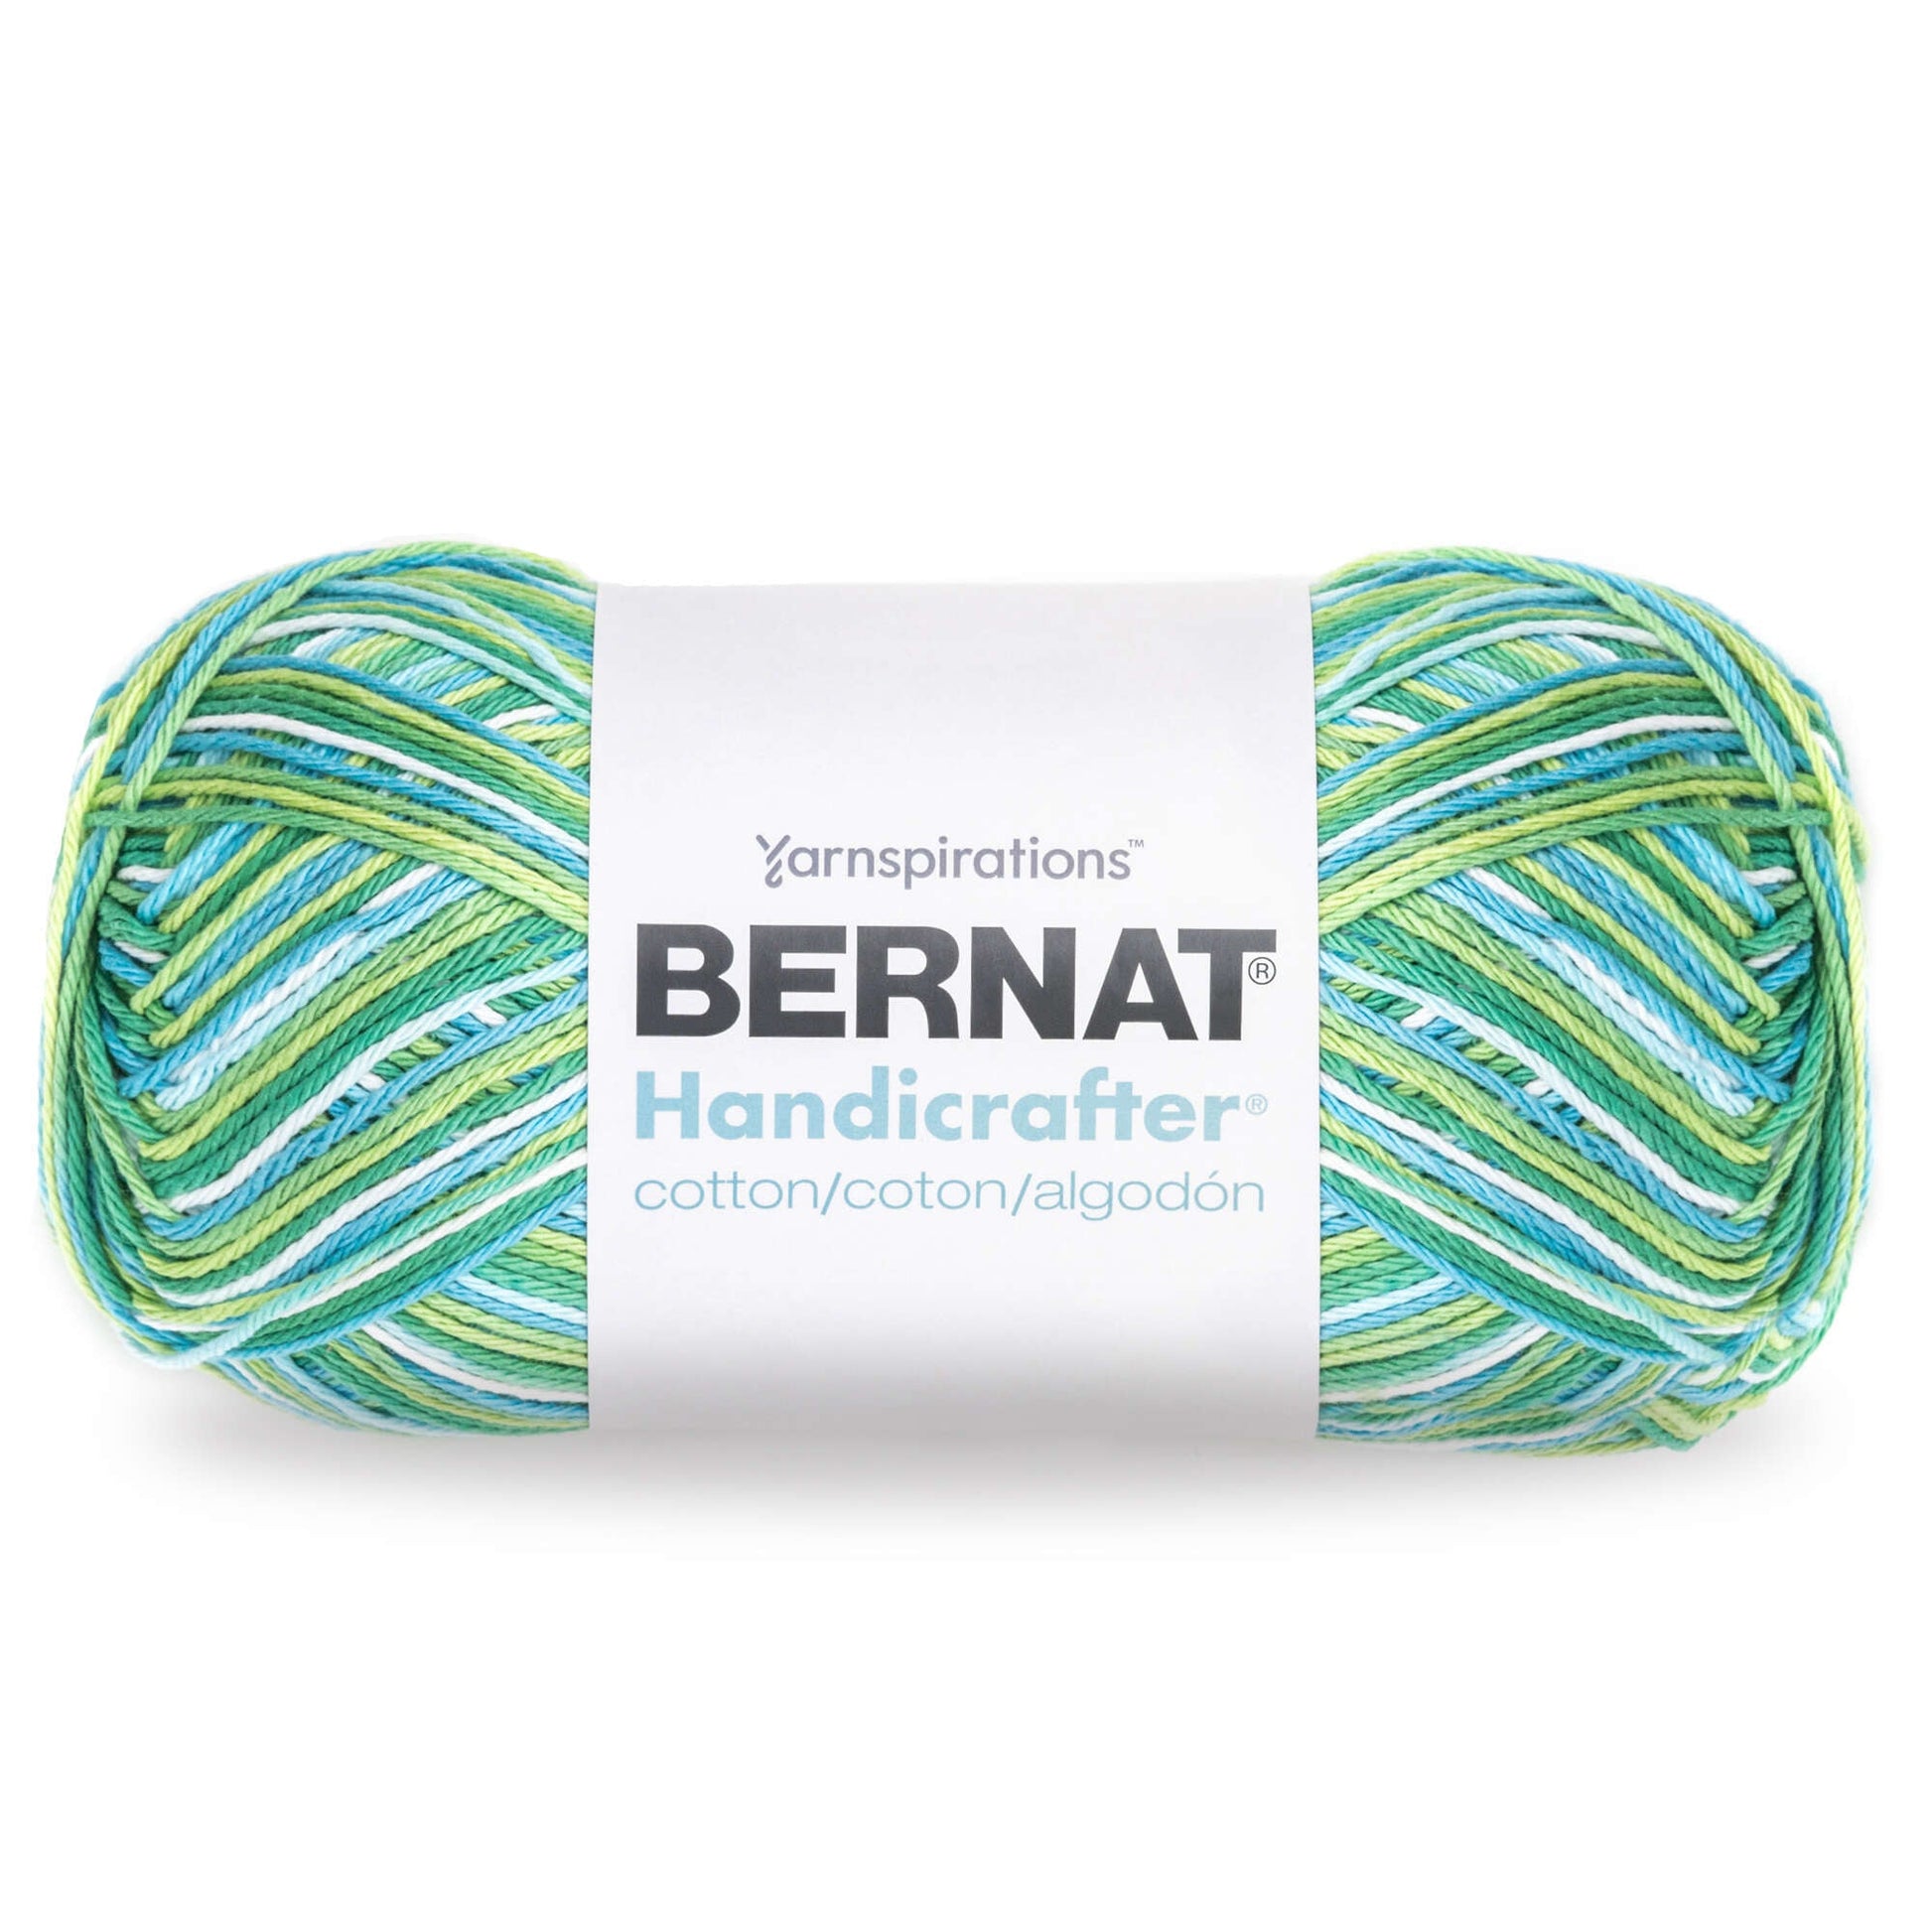 Bernat Handicrafter Cotton Ombres Yarn (340g/12oz) - Discontinued Shades |  Yarnspirations